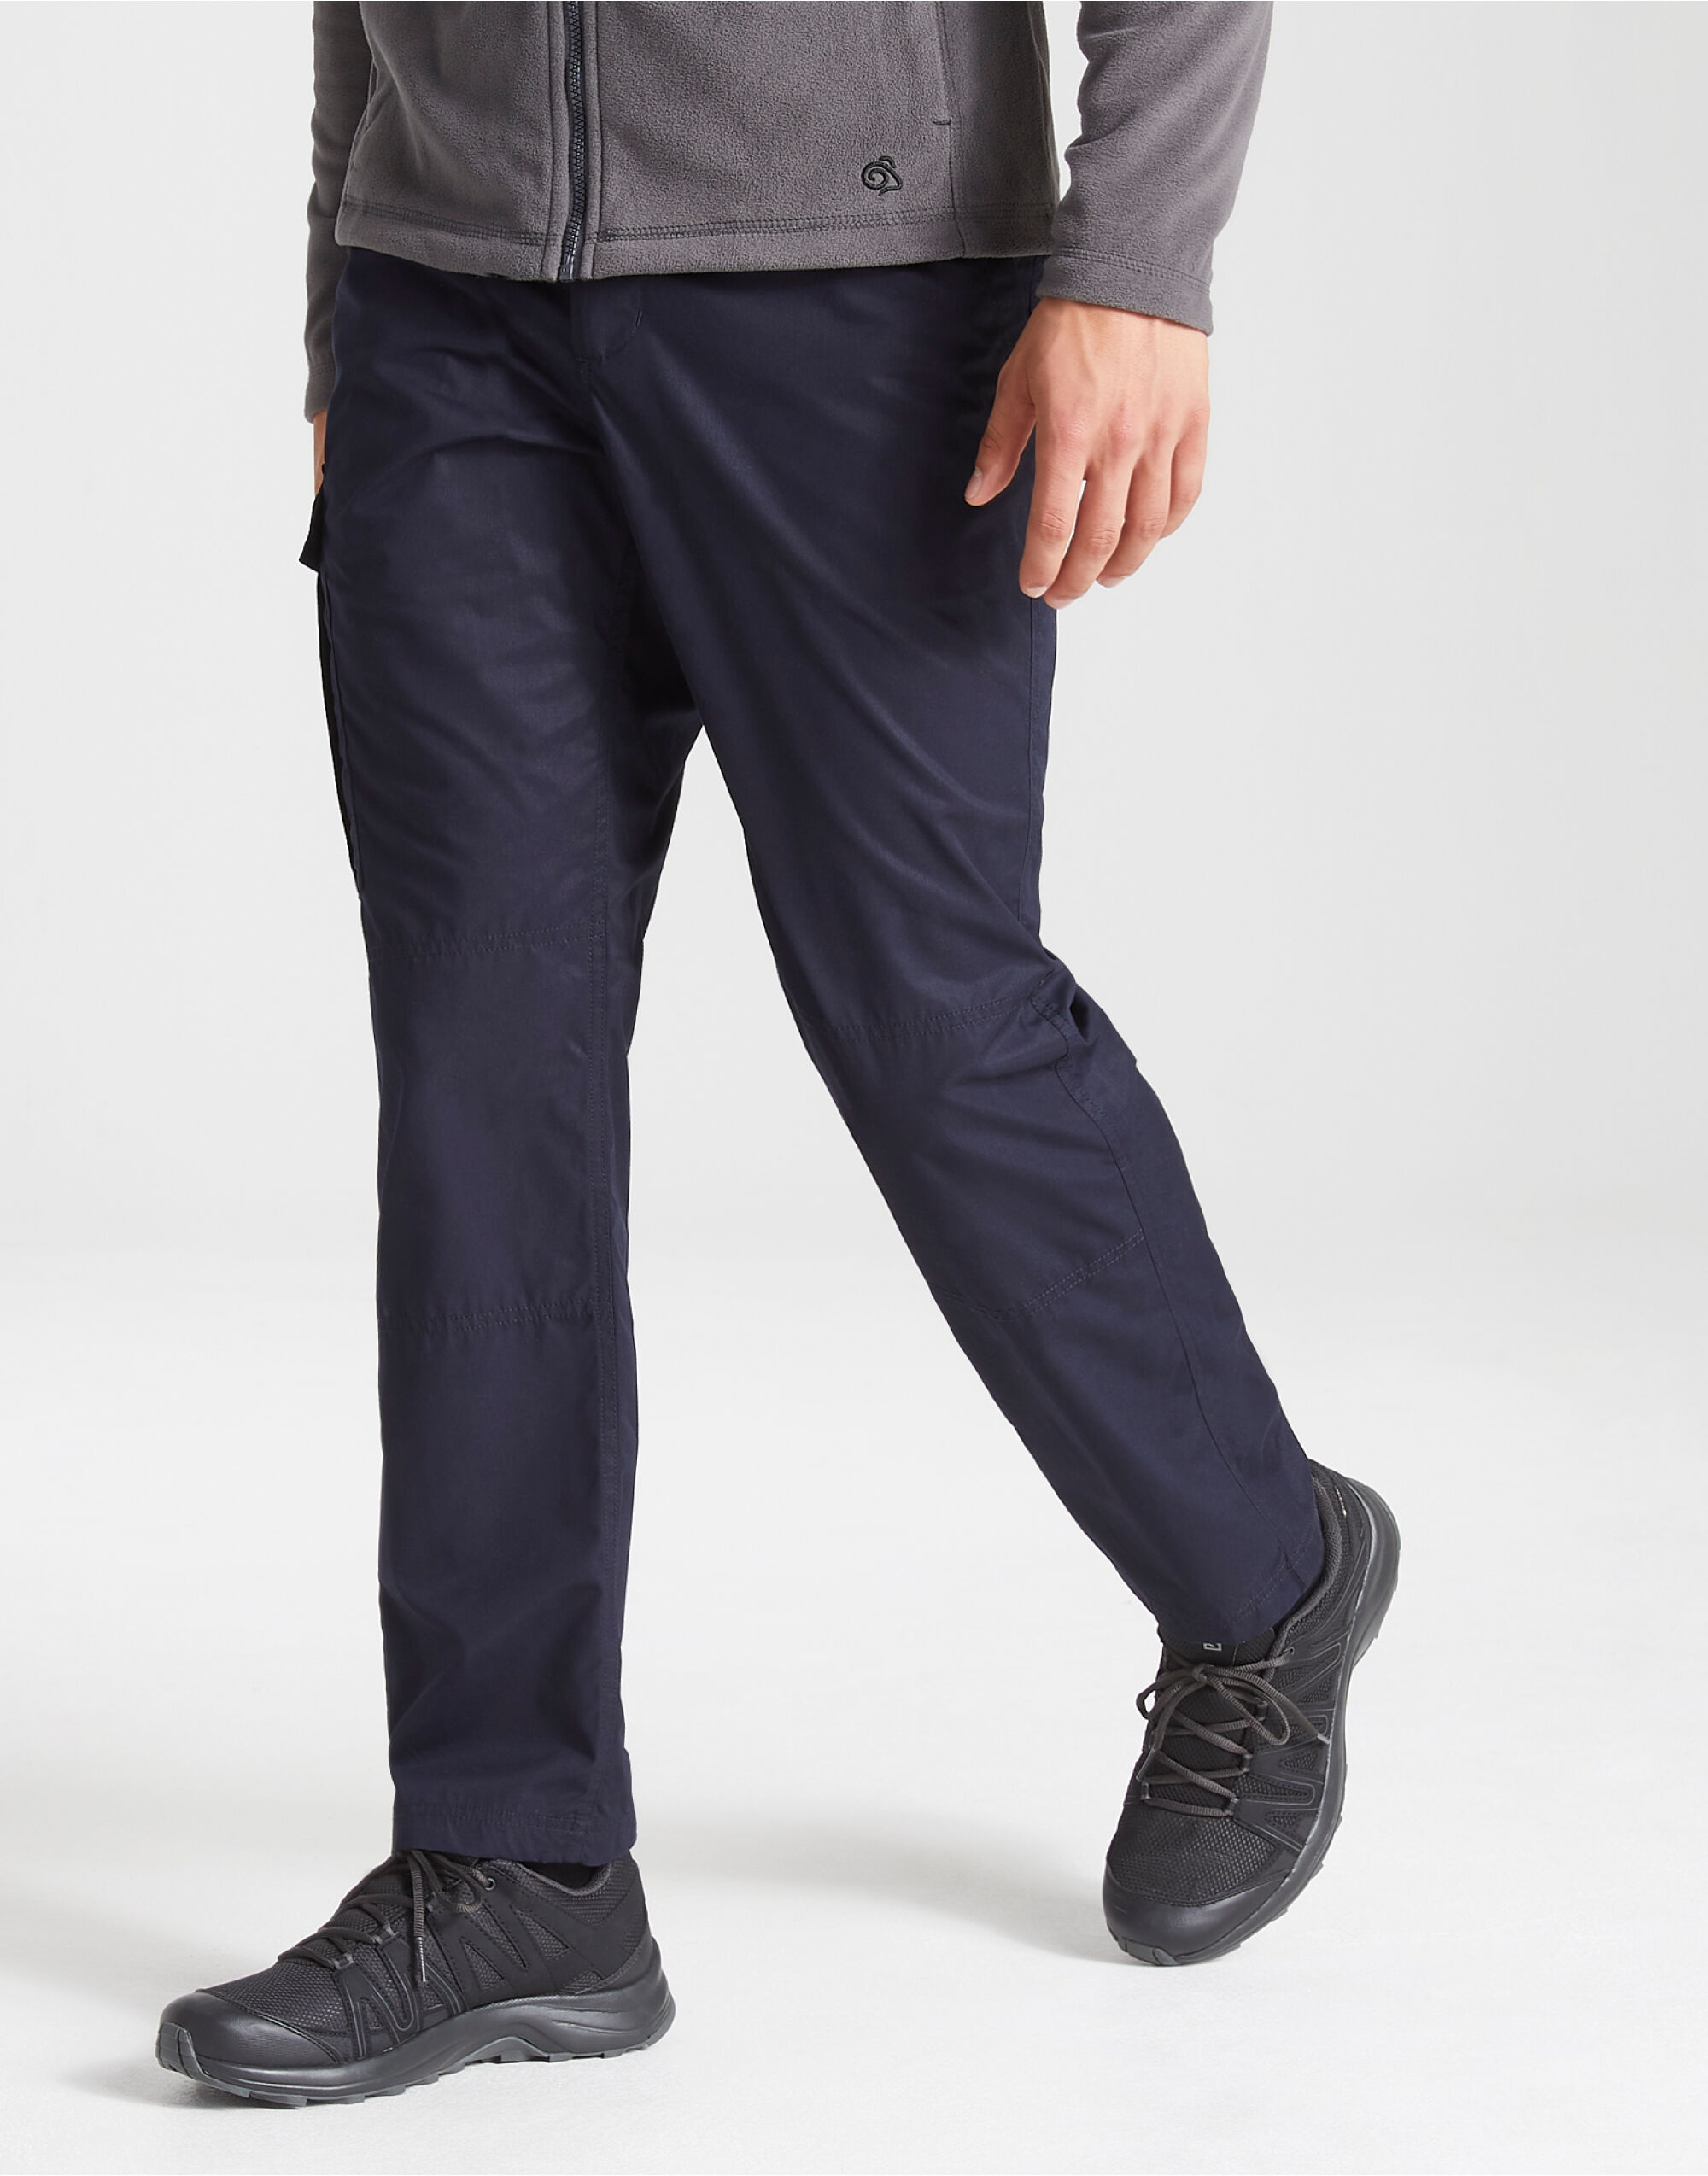 Men's Expert Kiwi Tailored Trousers (Regular)